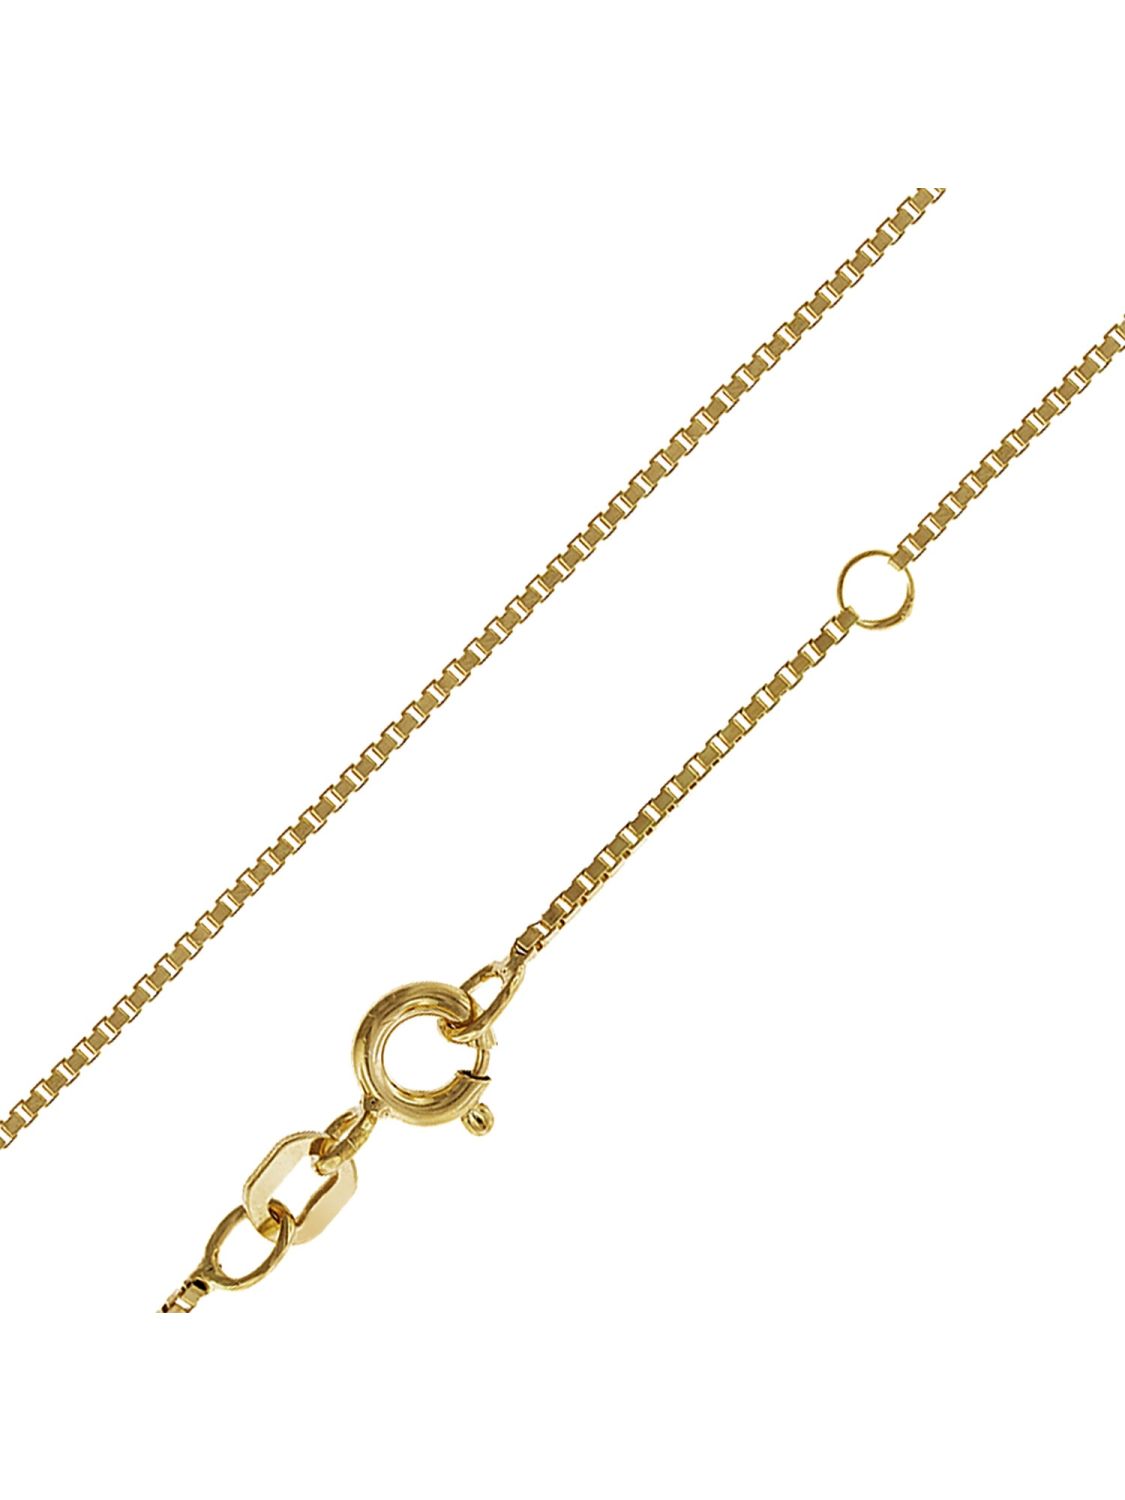 Acalee Peridot Gold / • 333 8K Halskette + Anhänger 80-1005-04 uhrcenter